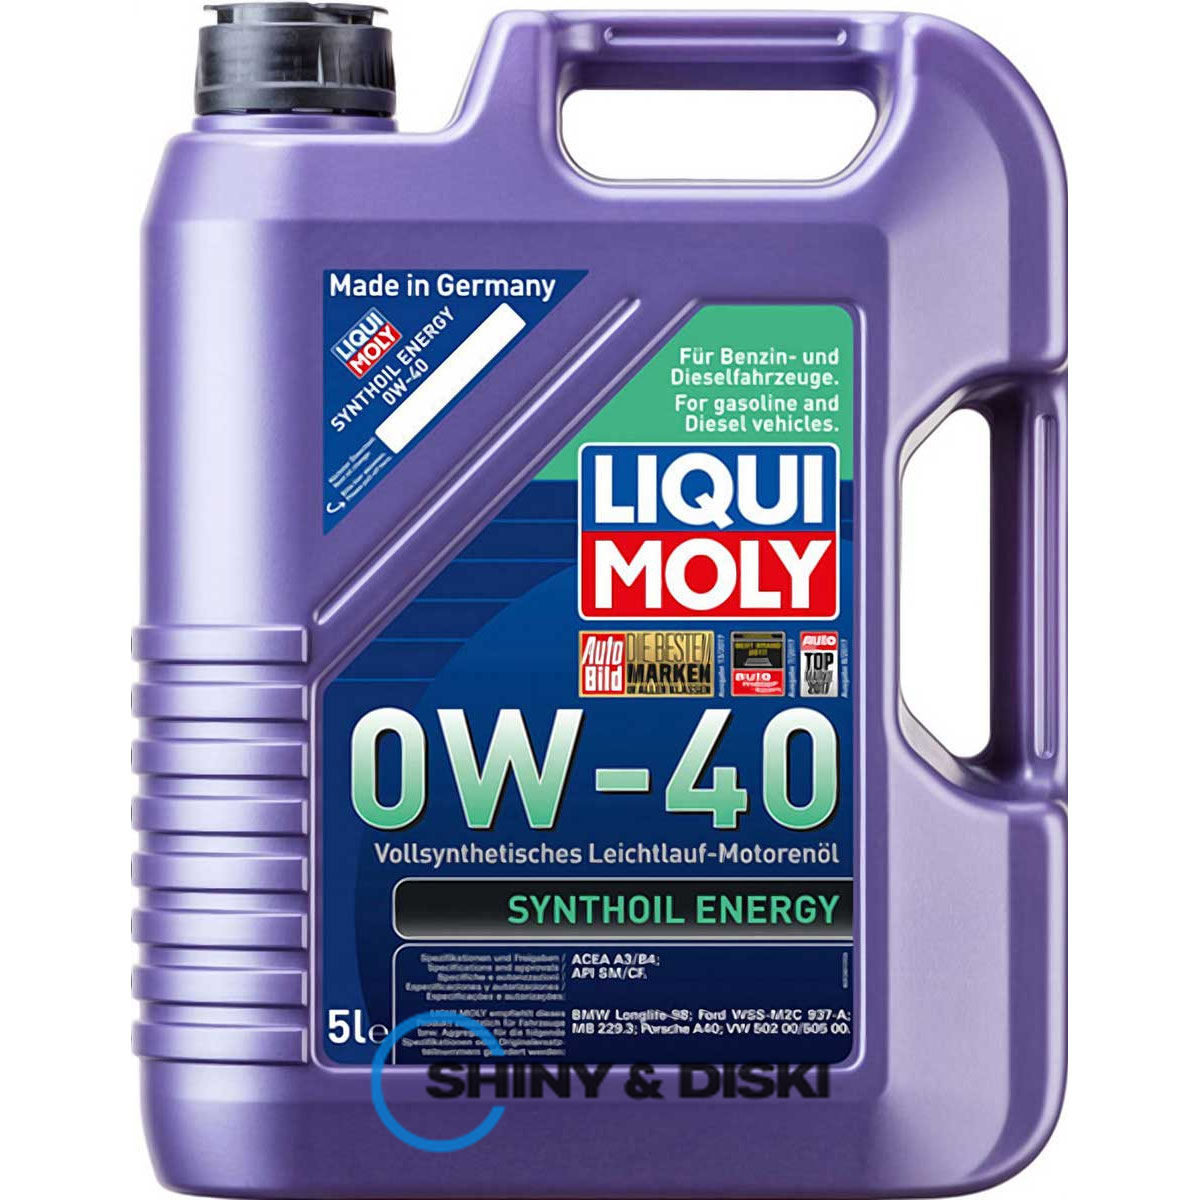 liqui moly synthoil energy 0w-40 (5л)